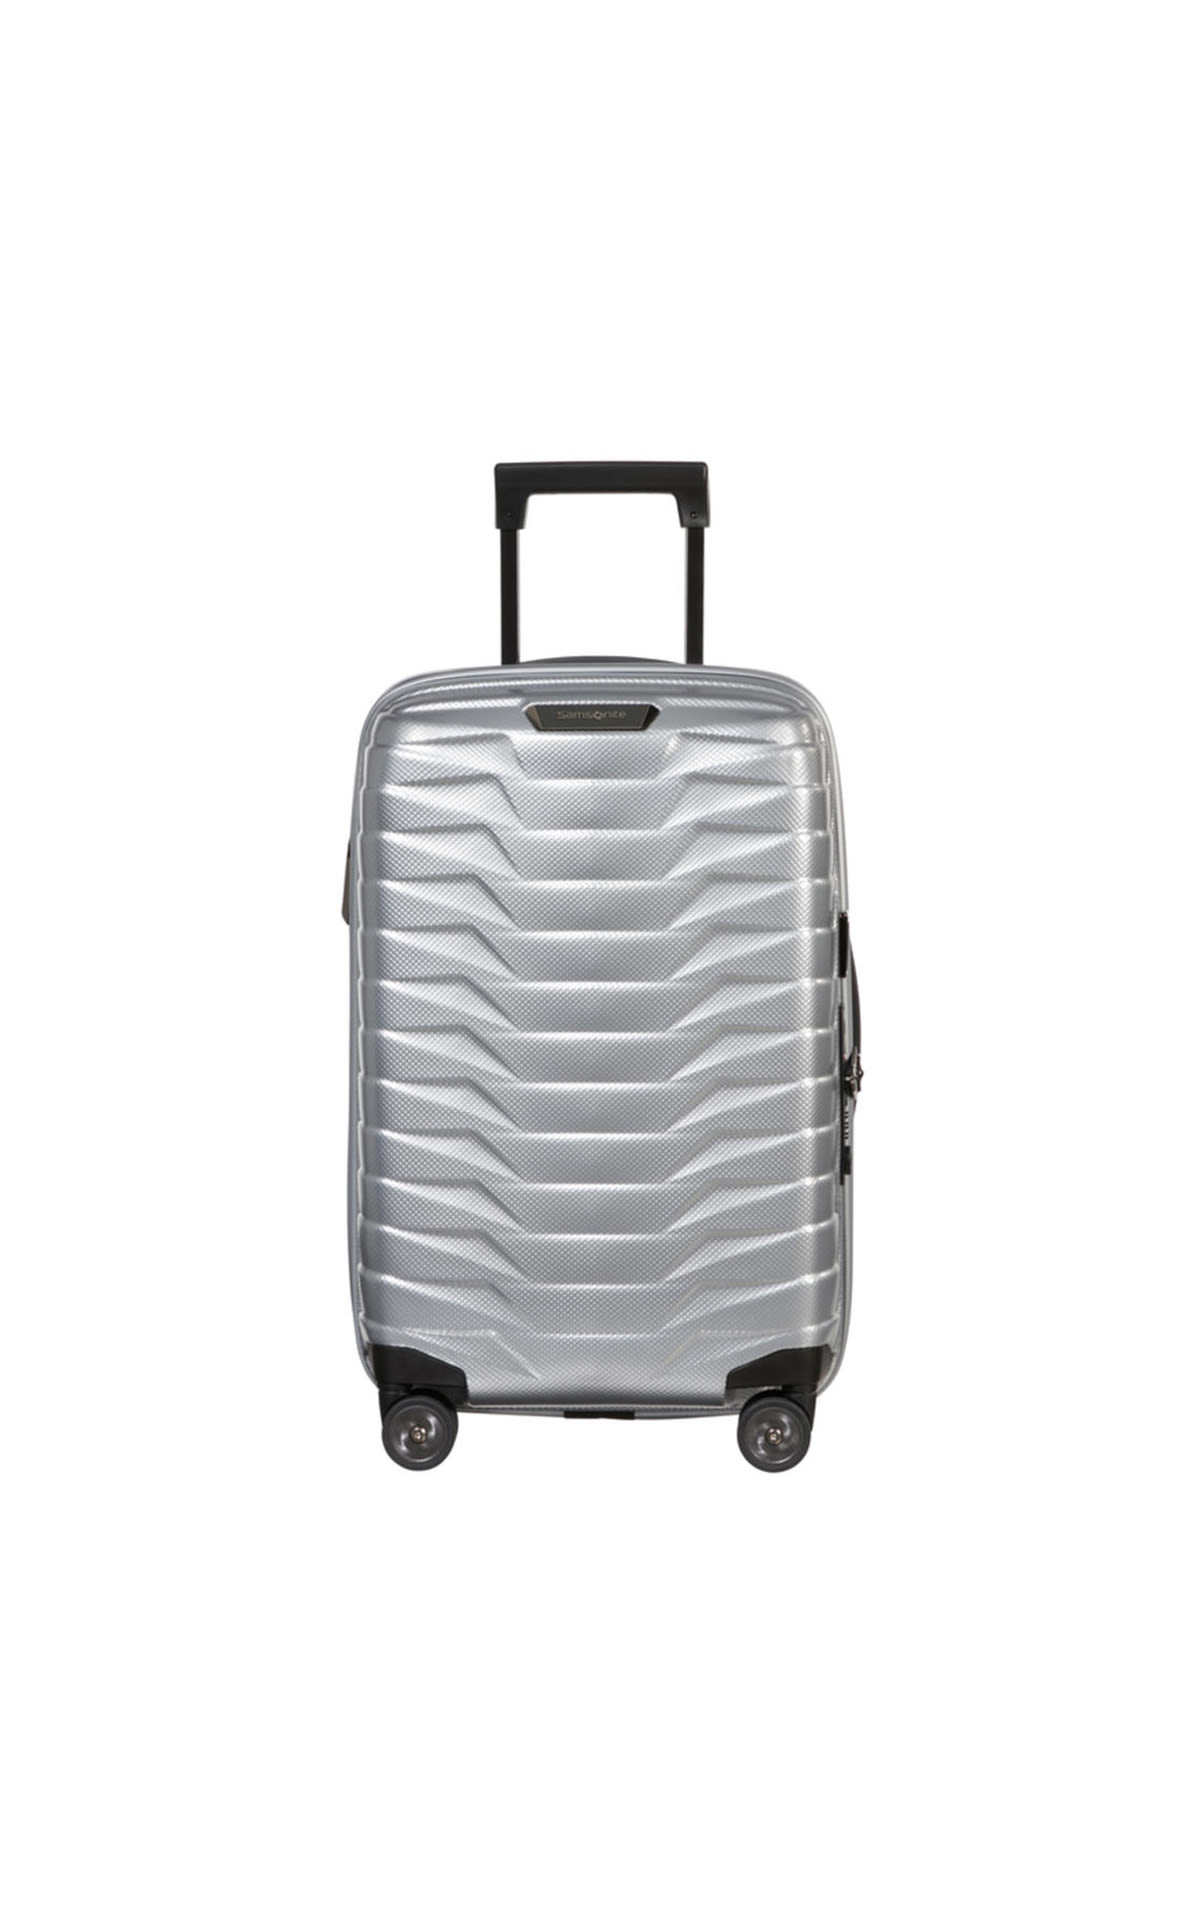 Samsonite Prox 55/20 silver suitcase